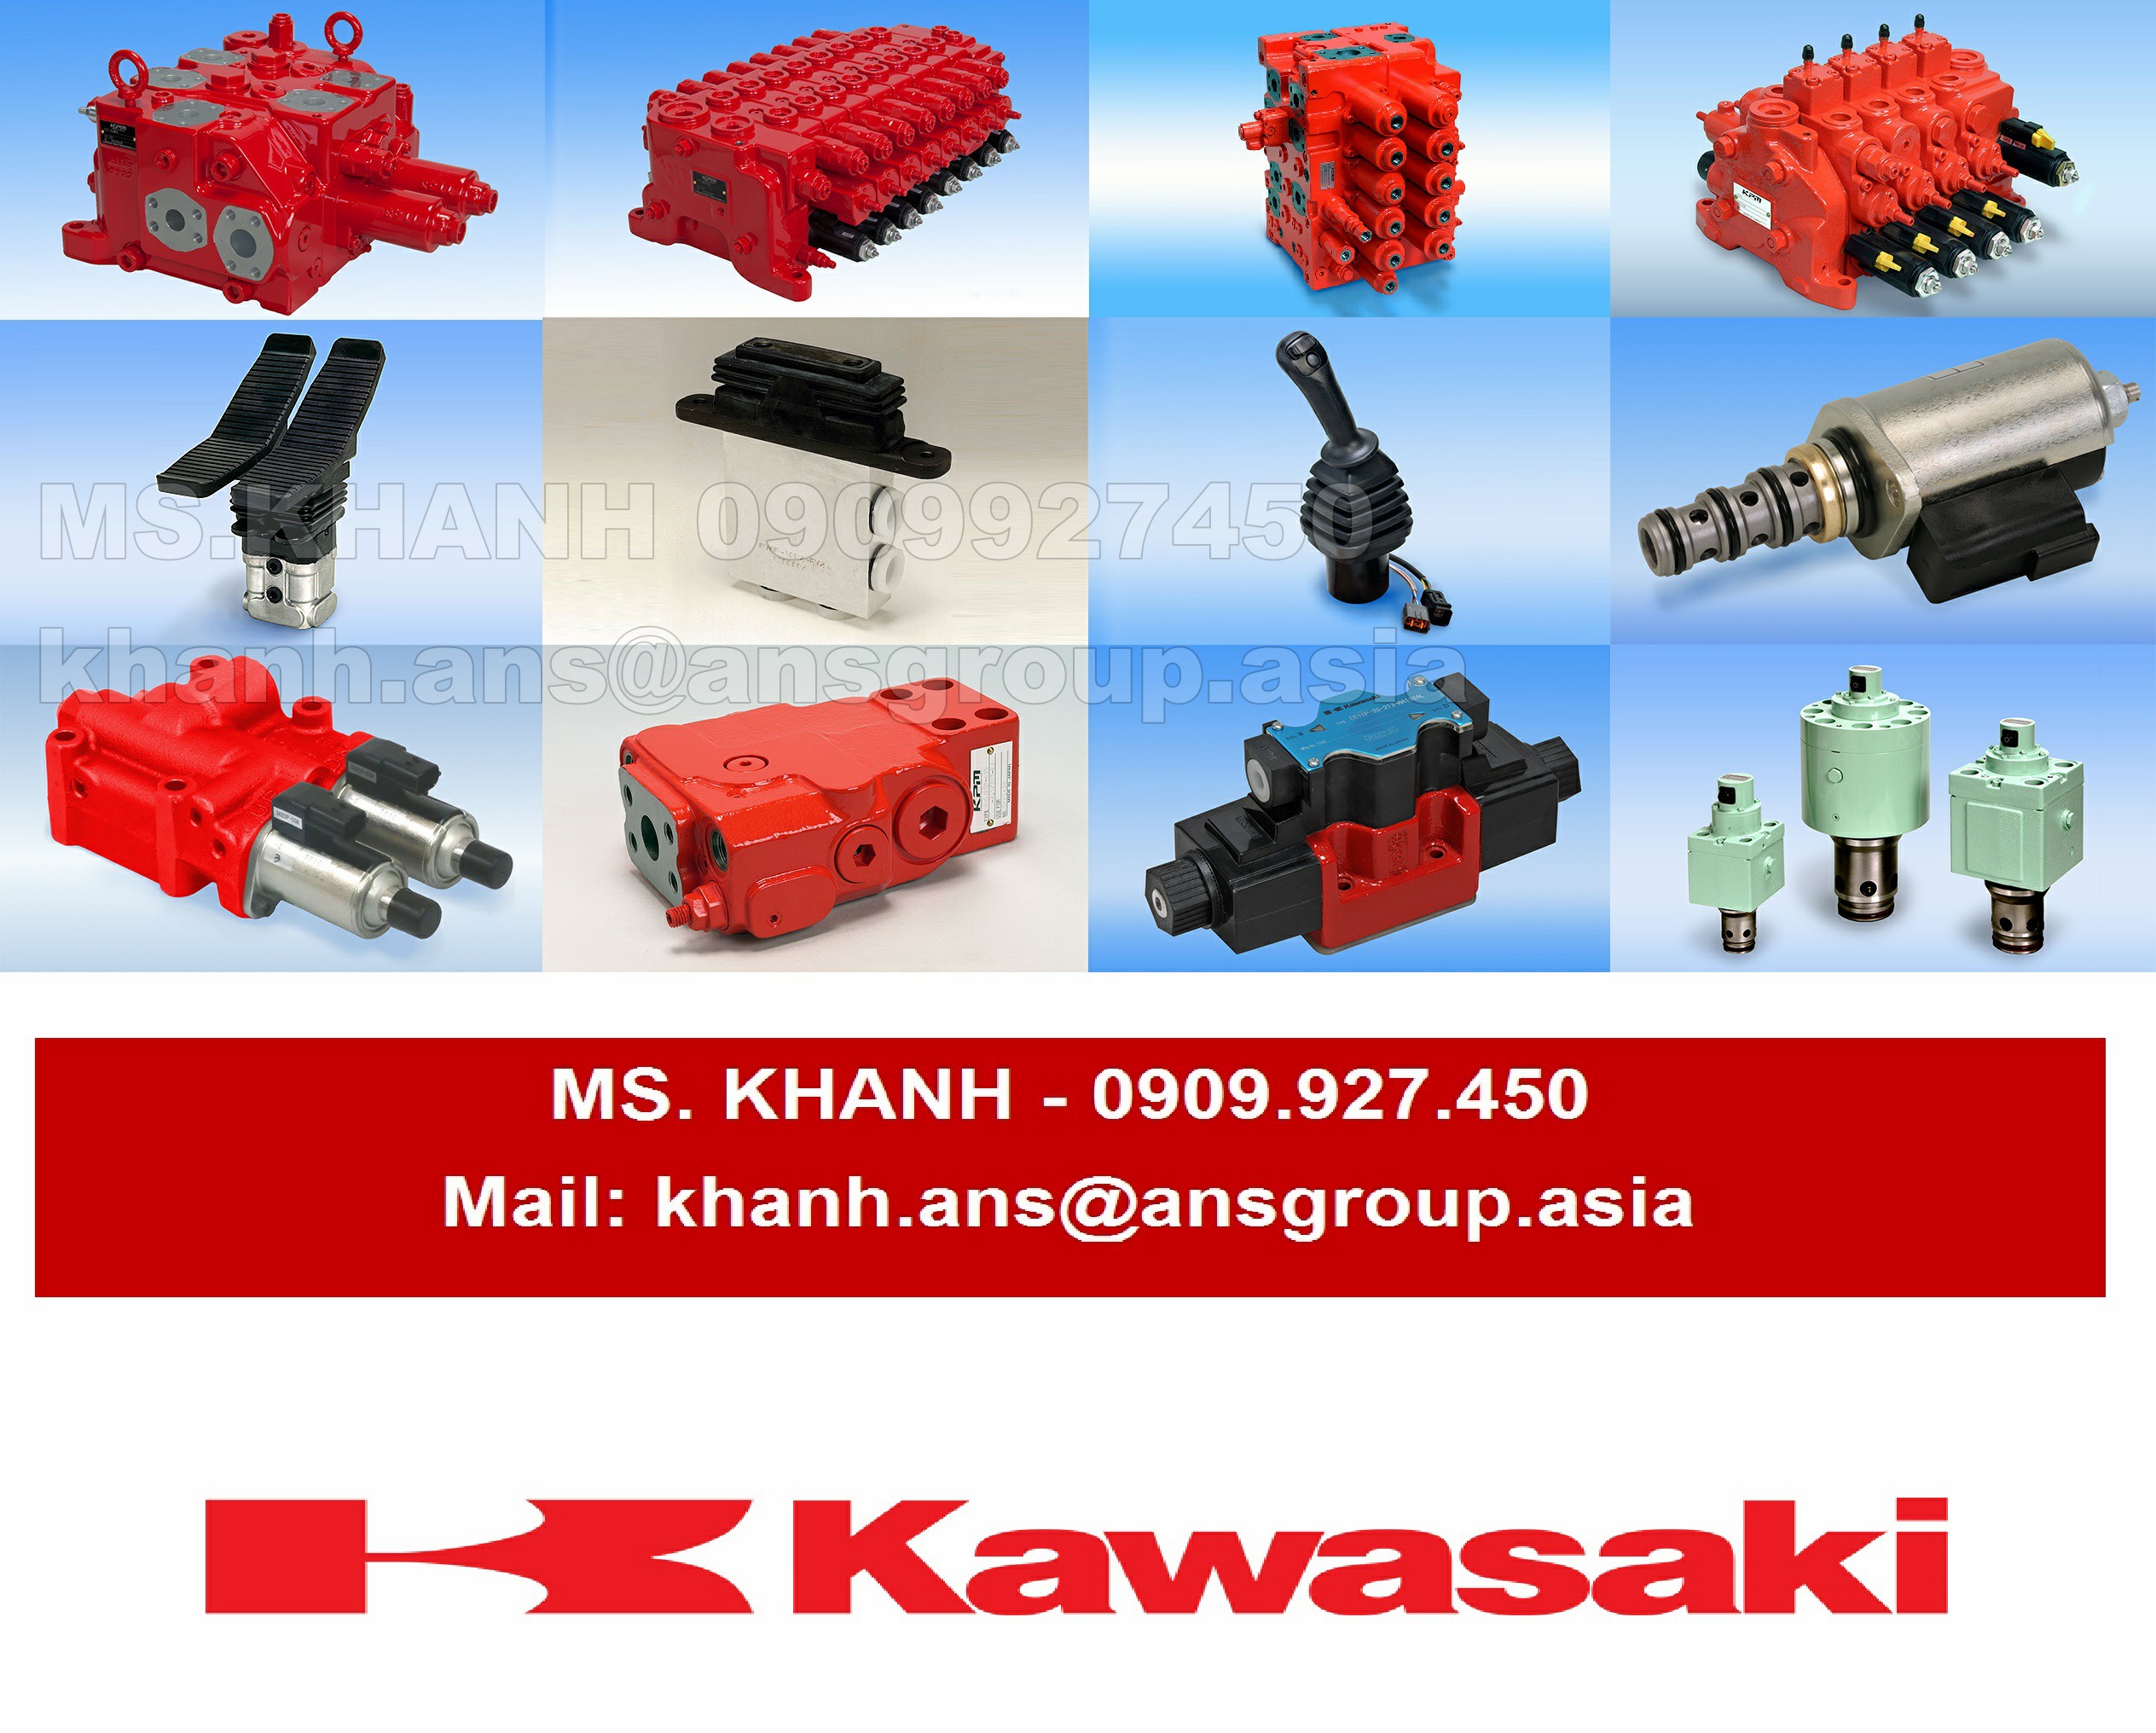 van-ch62f-10-10-check-valve-replace-for-sv62fa1-k10-kawasaki-valve-kawasaki-heavy-industries-group-vietnam.png